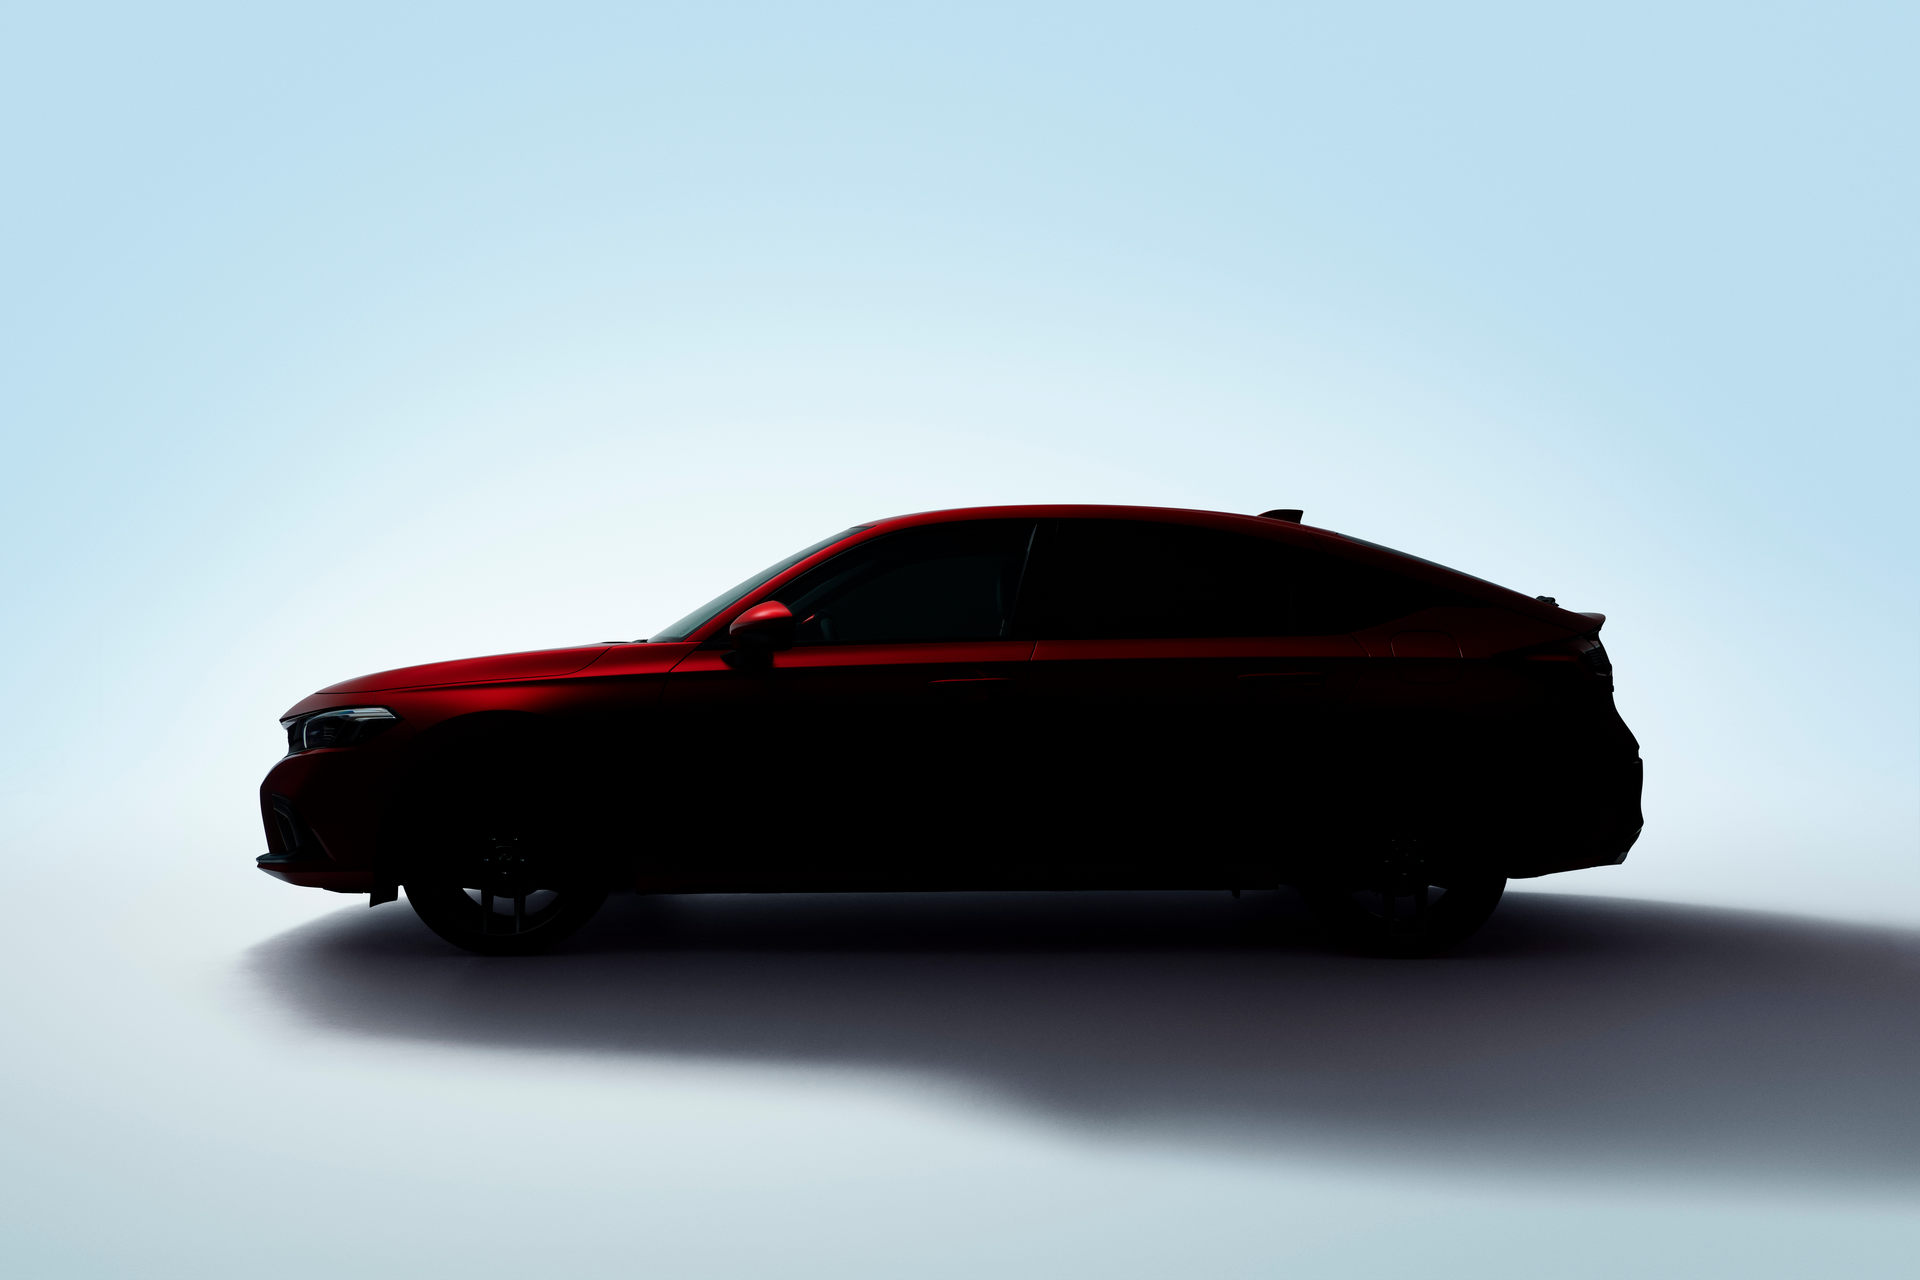  Honda Civic hatchback – premiera 23 czerwca